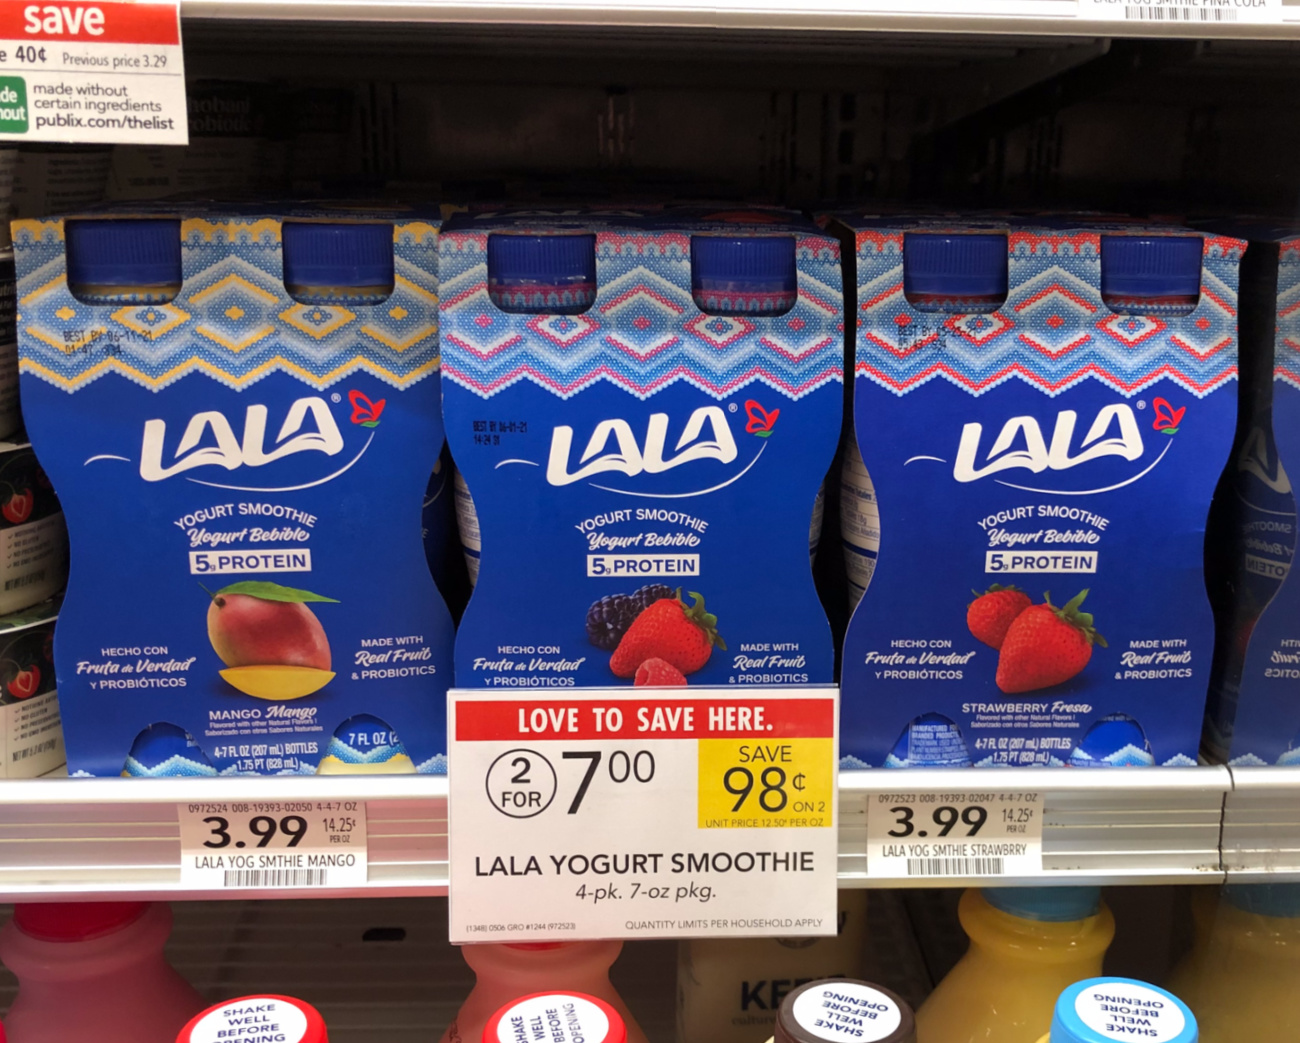 Take Advantage Of Big Savings On Delicious LALA Yogurt Smoothies At Publix on I Heart Publix